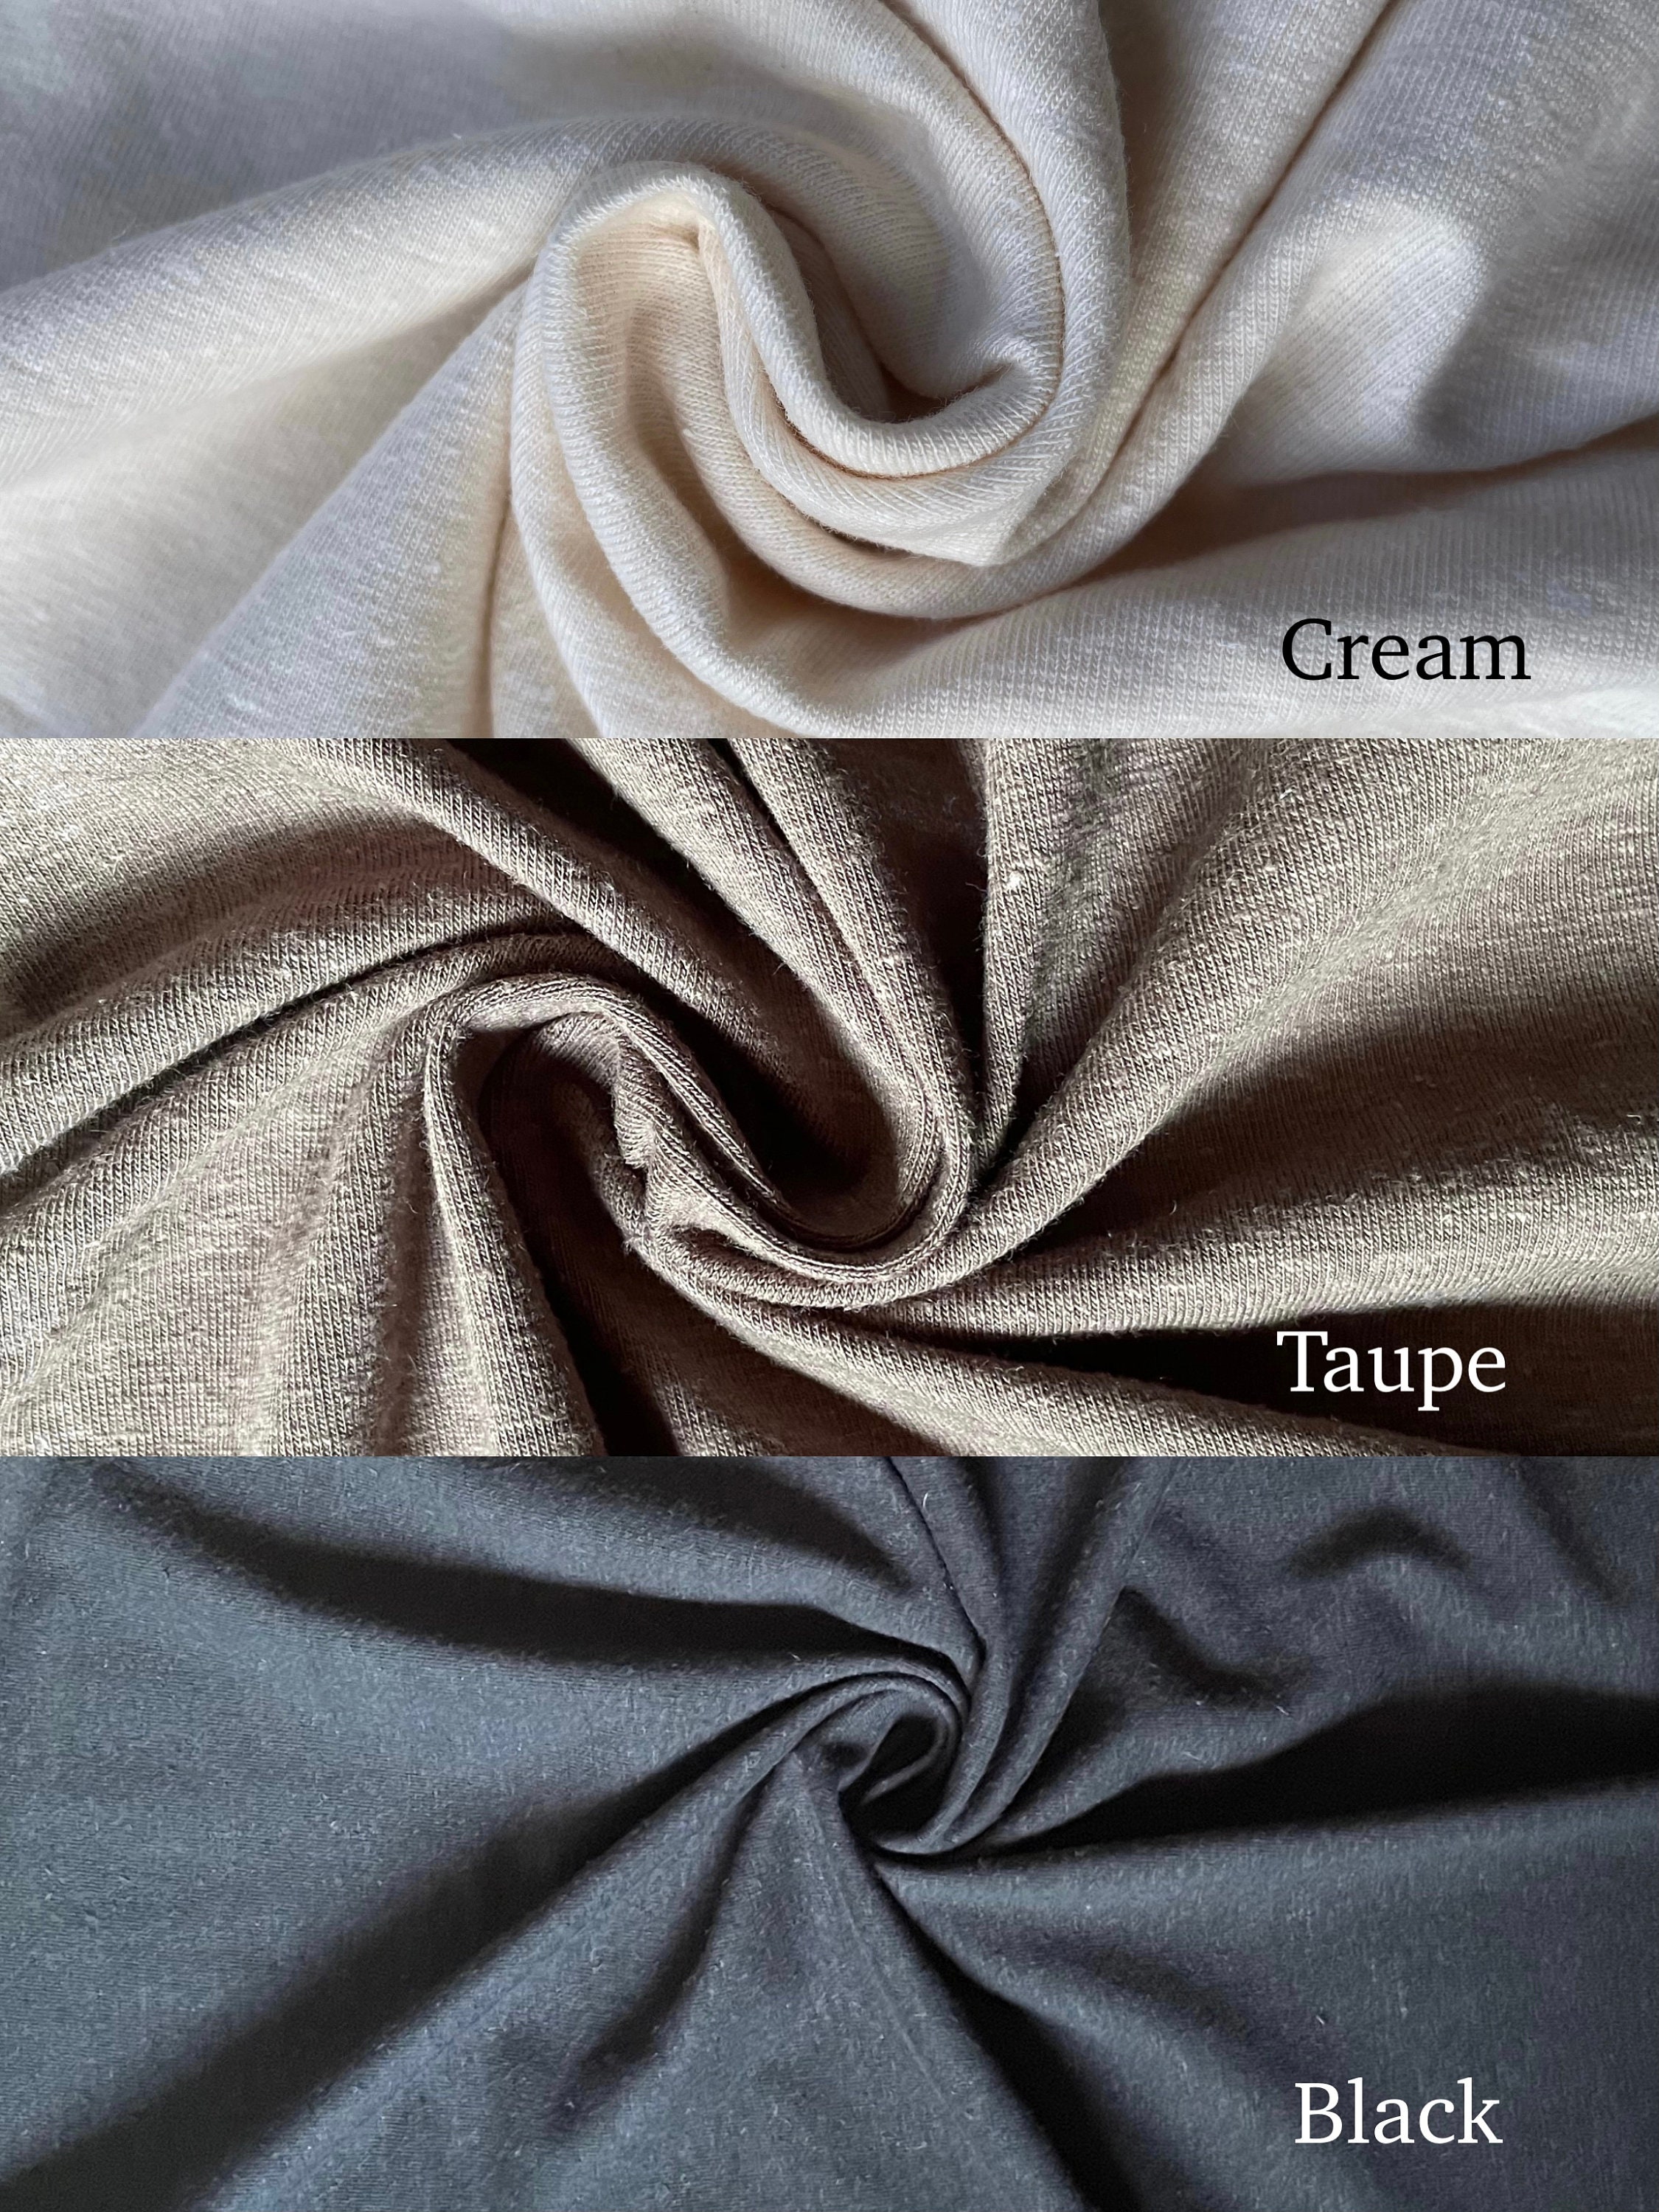 Leggings Hemp, Organic Cotton BASE LAYER Thin Fabric -  Canada